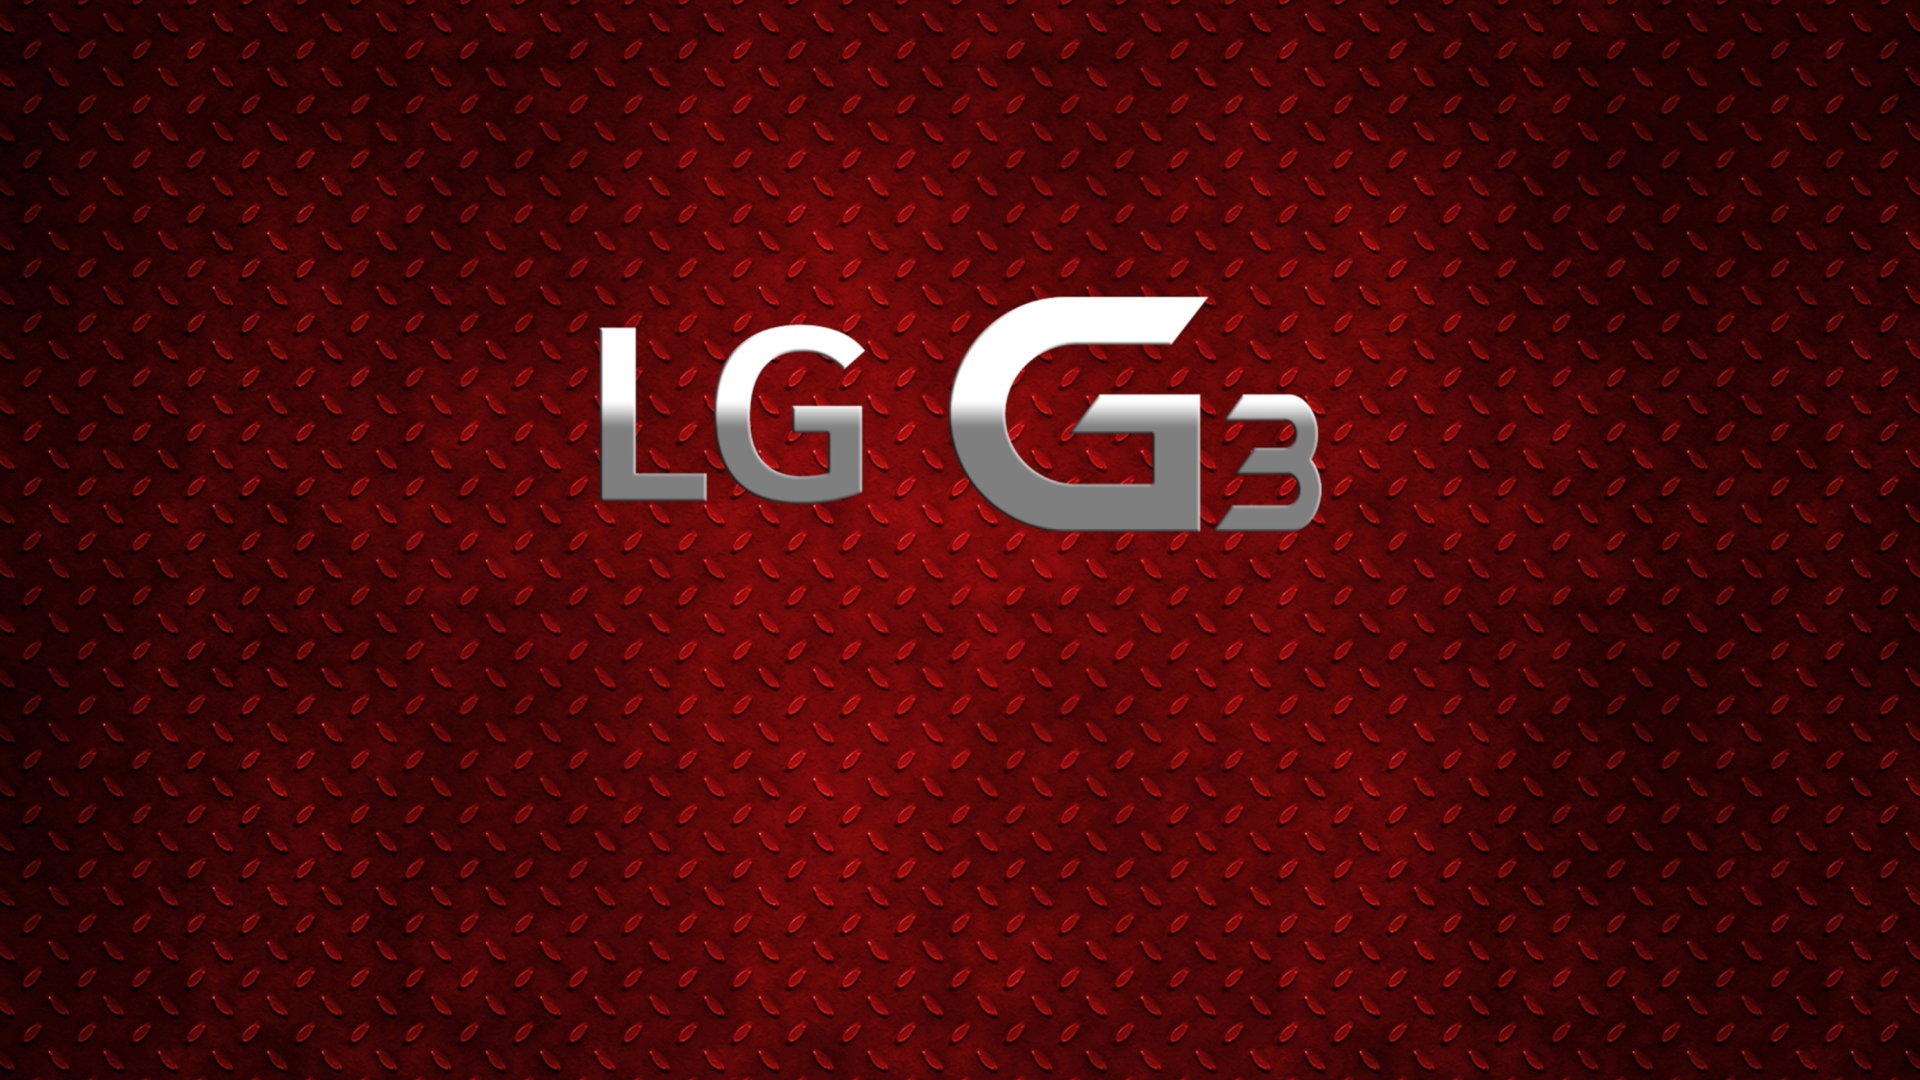 LG G3 wallpaper 1920x1080